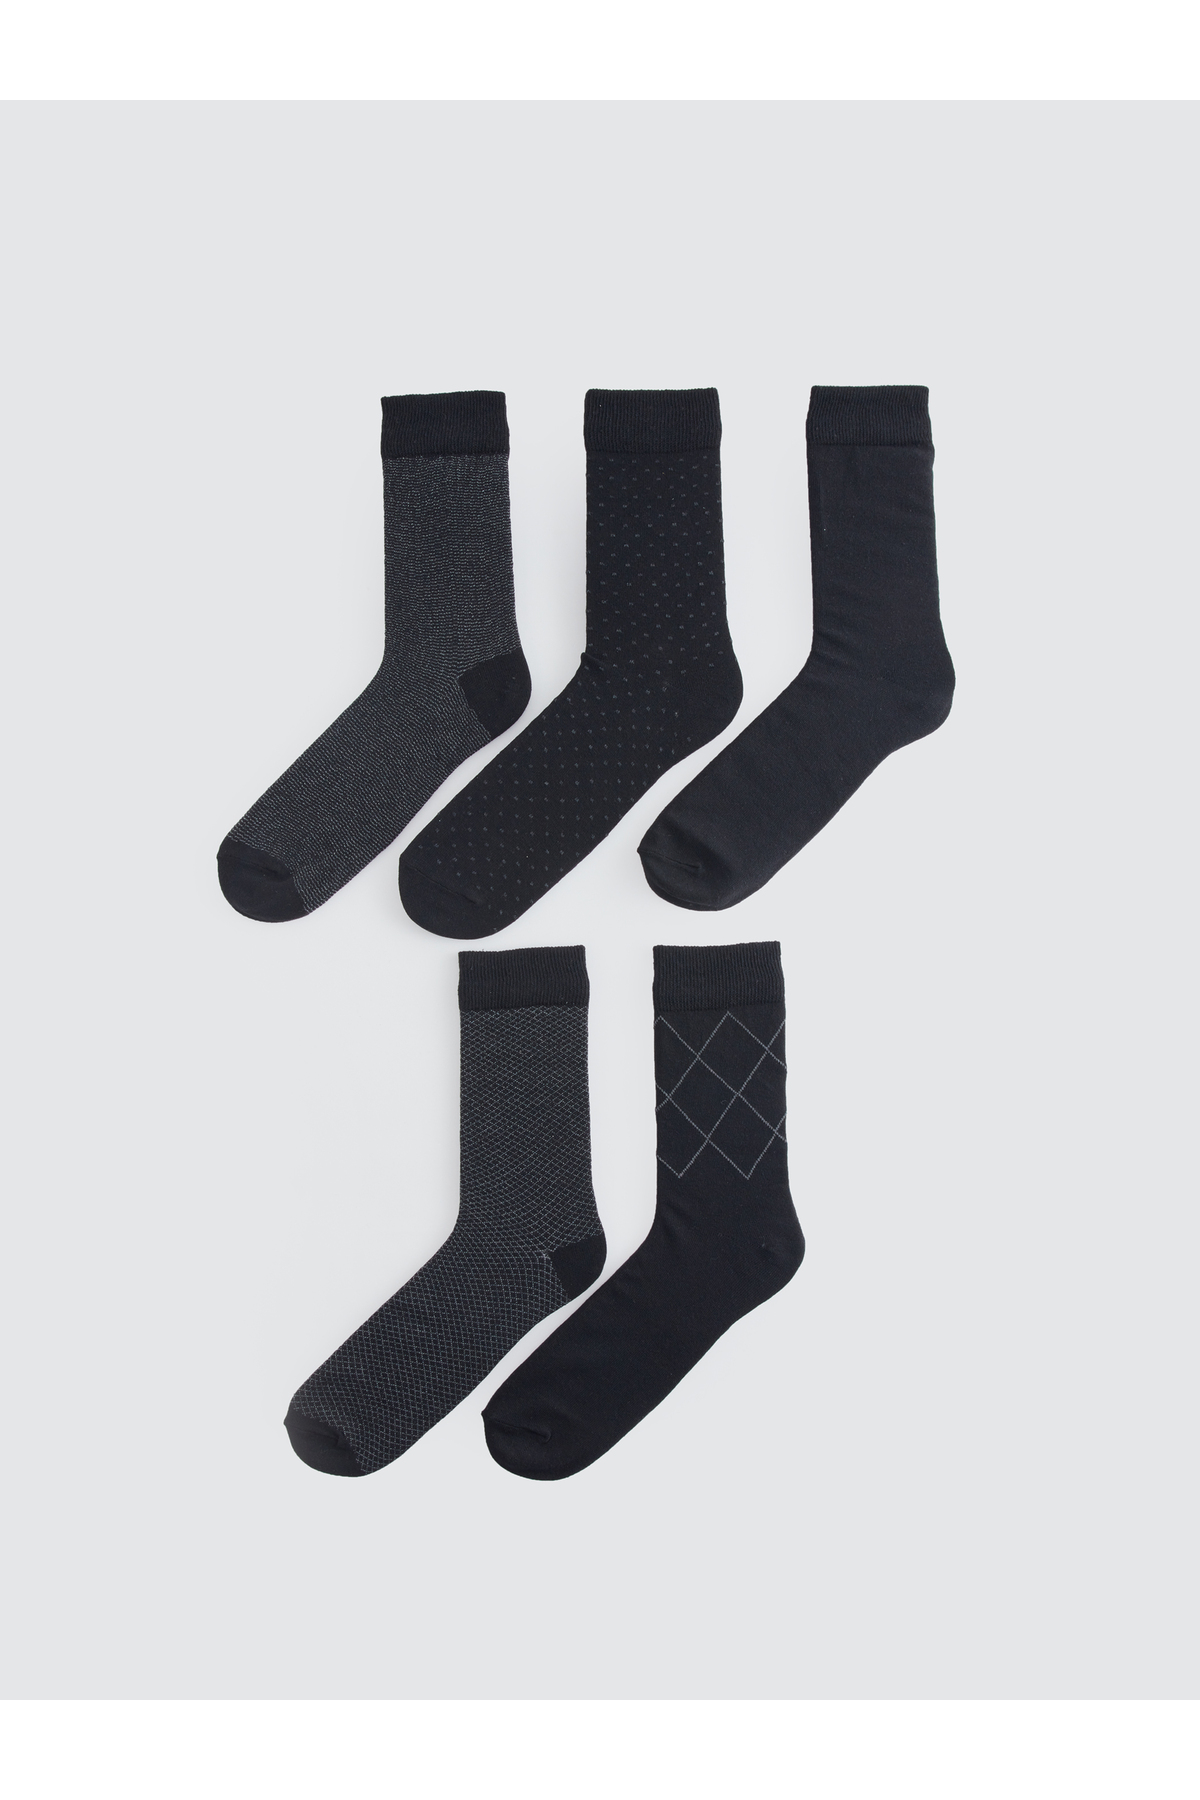 LC Waikiki 5-Pack Men's Printed Socks